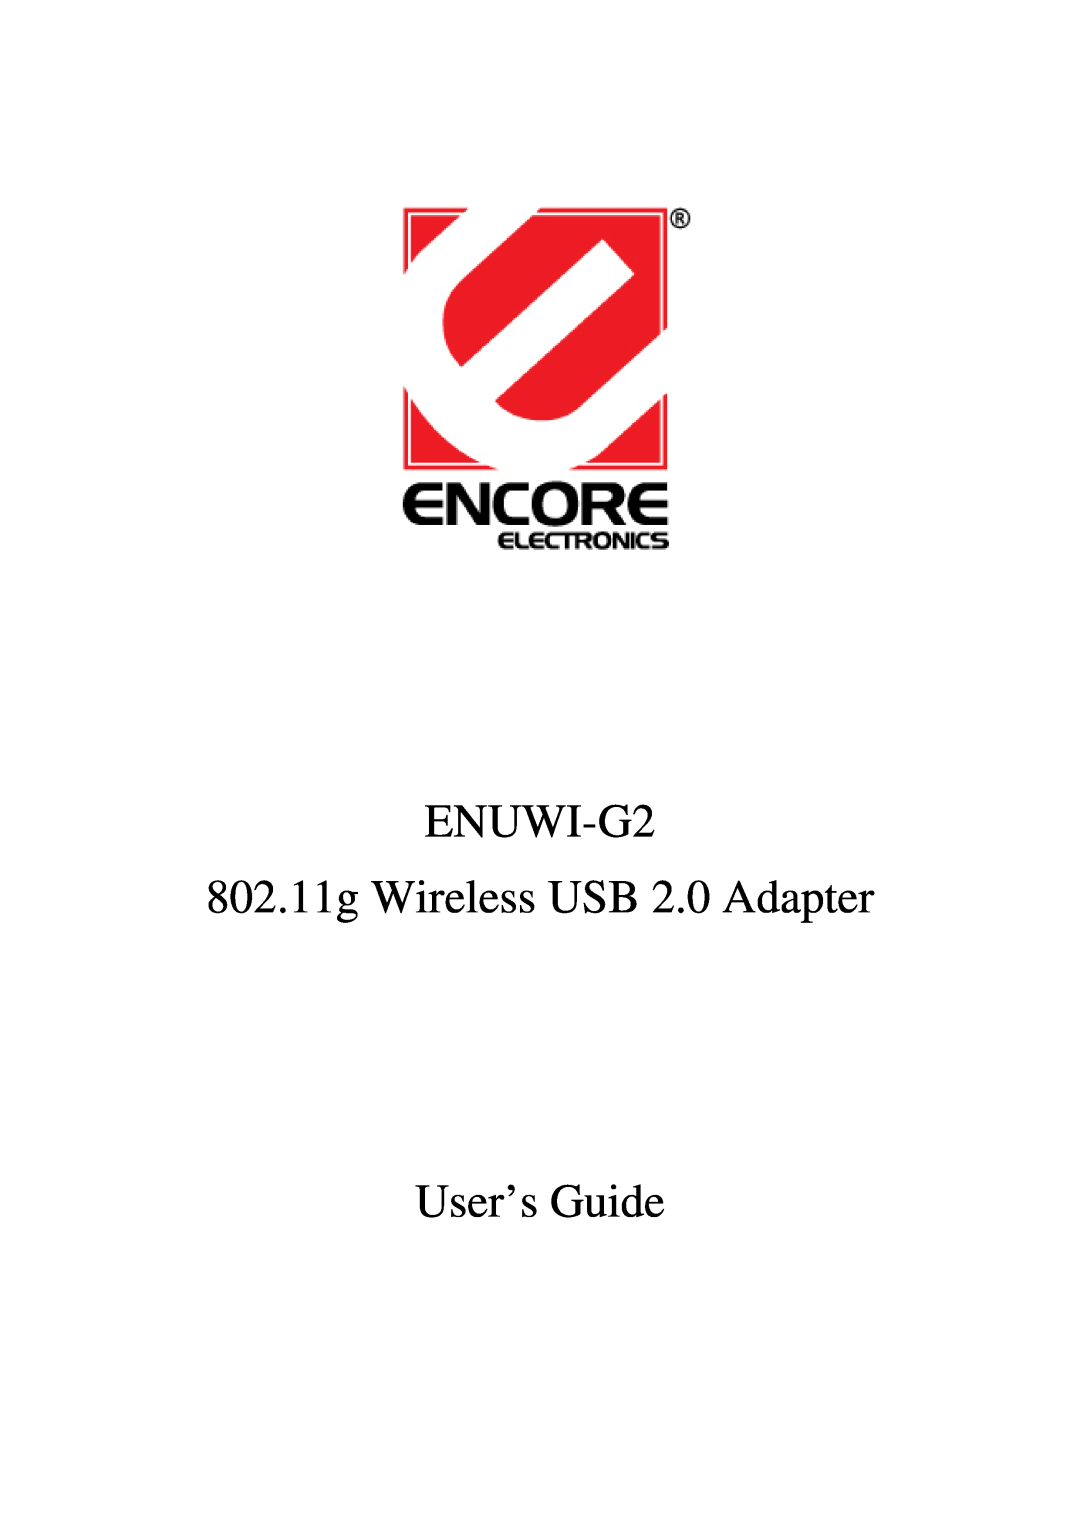 Encore electronic manual ENUWI-G2 802.11g Wireless USB 2.0 Adapter User’s Guide 